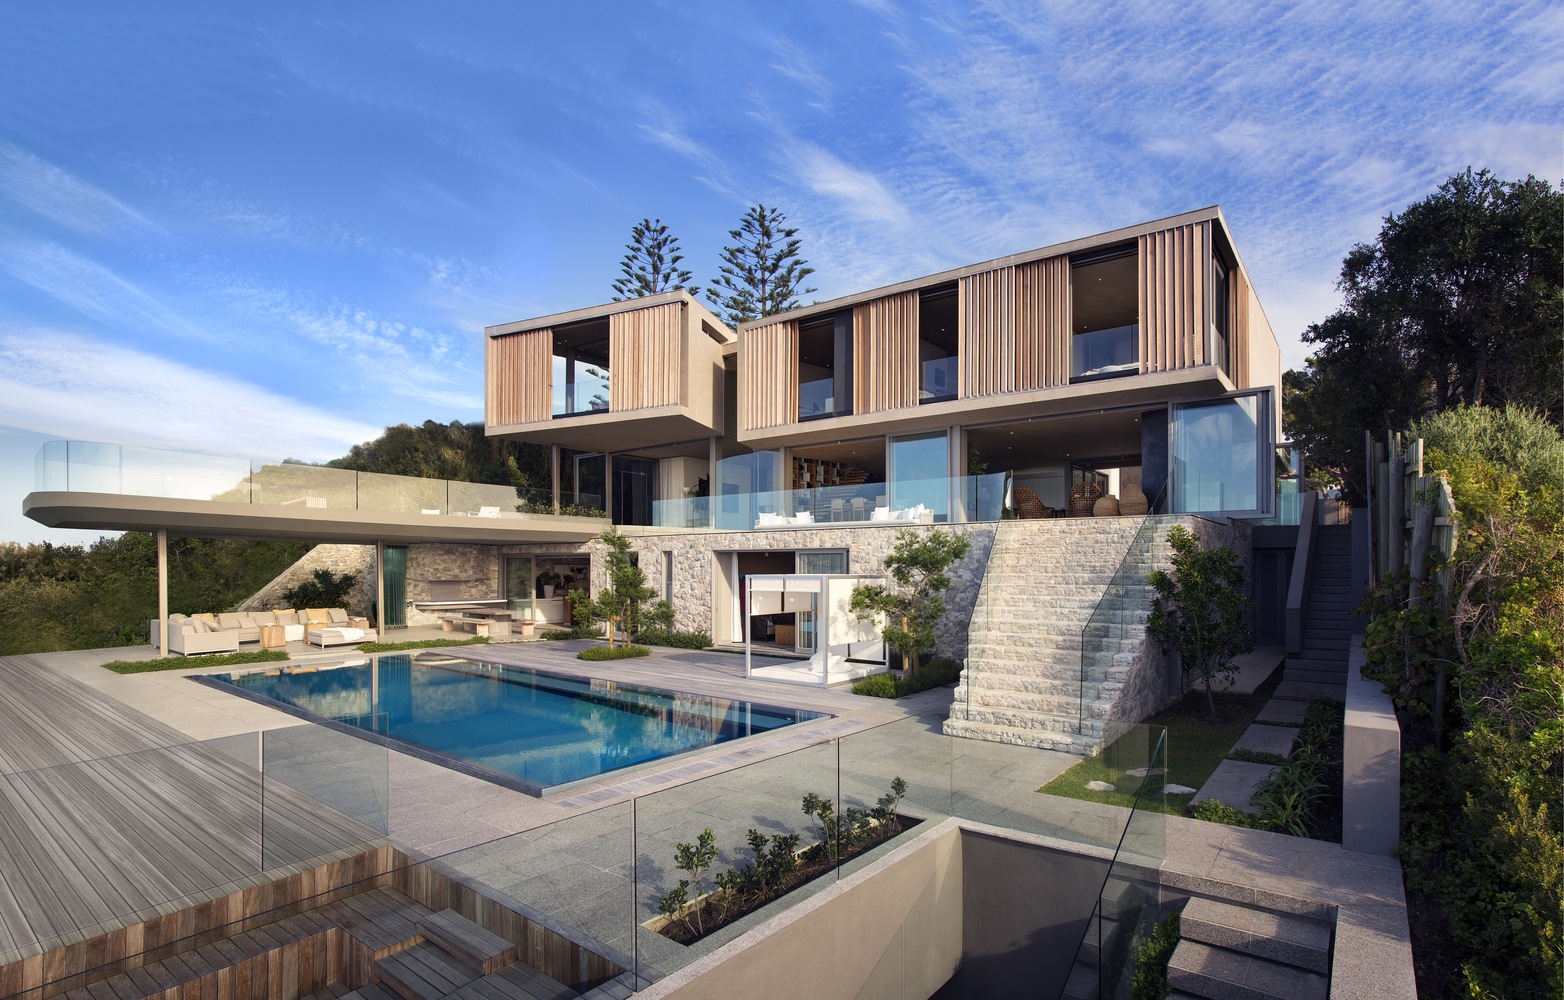 House Architecture Modern Playground Swimming Pool 1564x1000